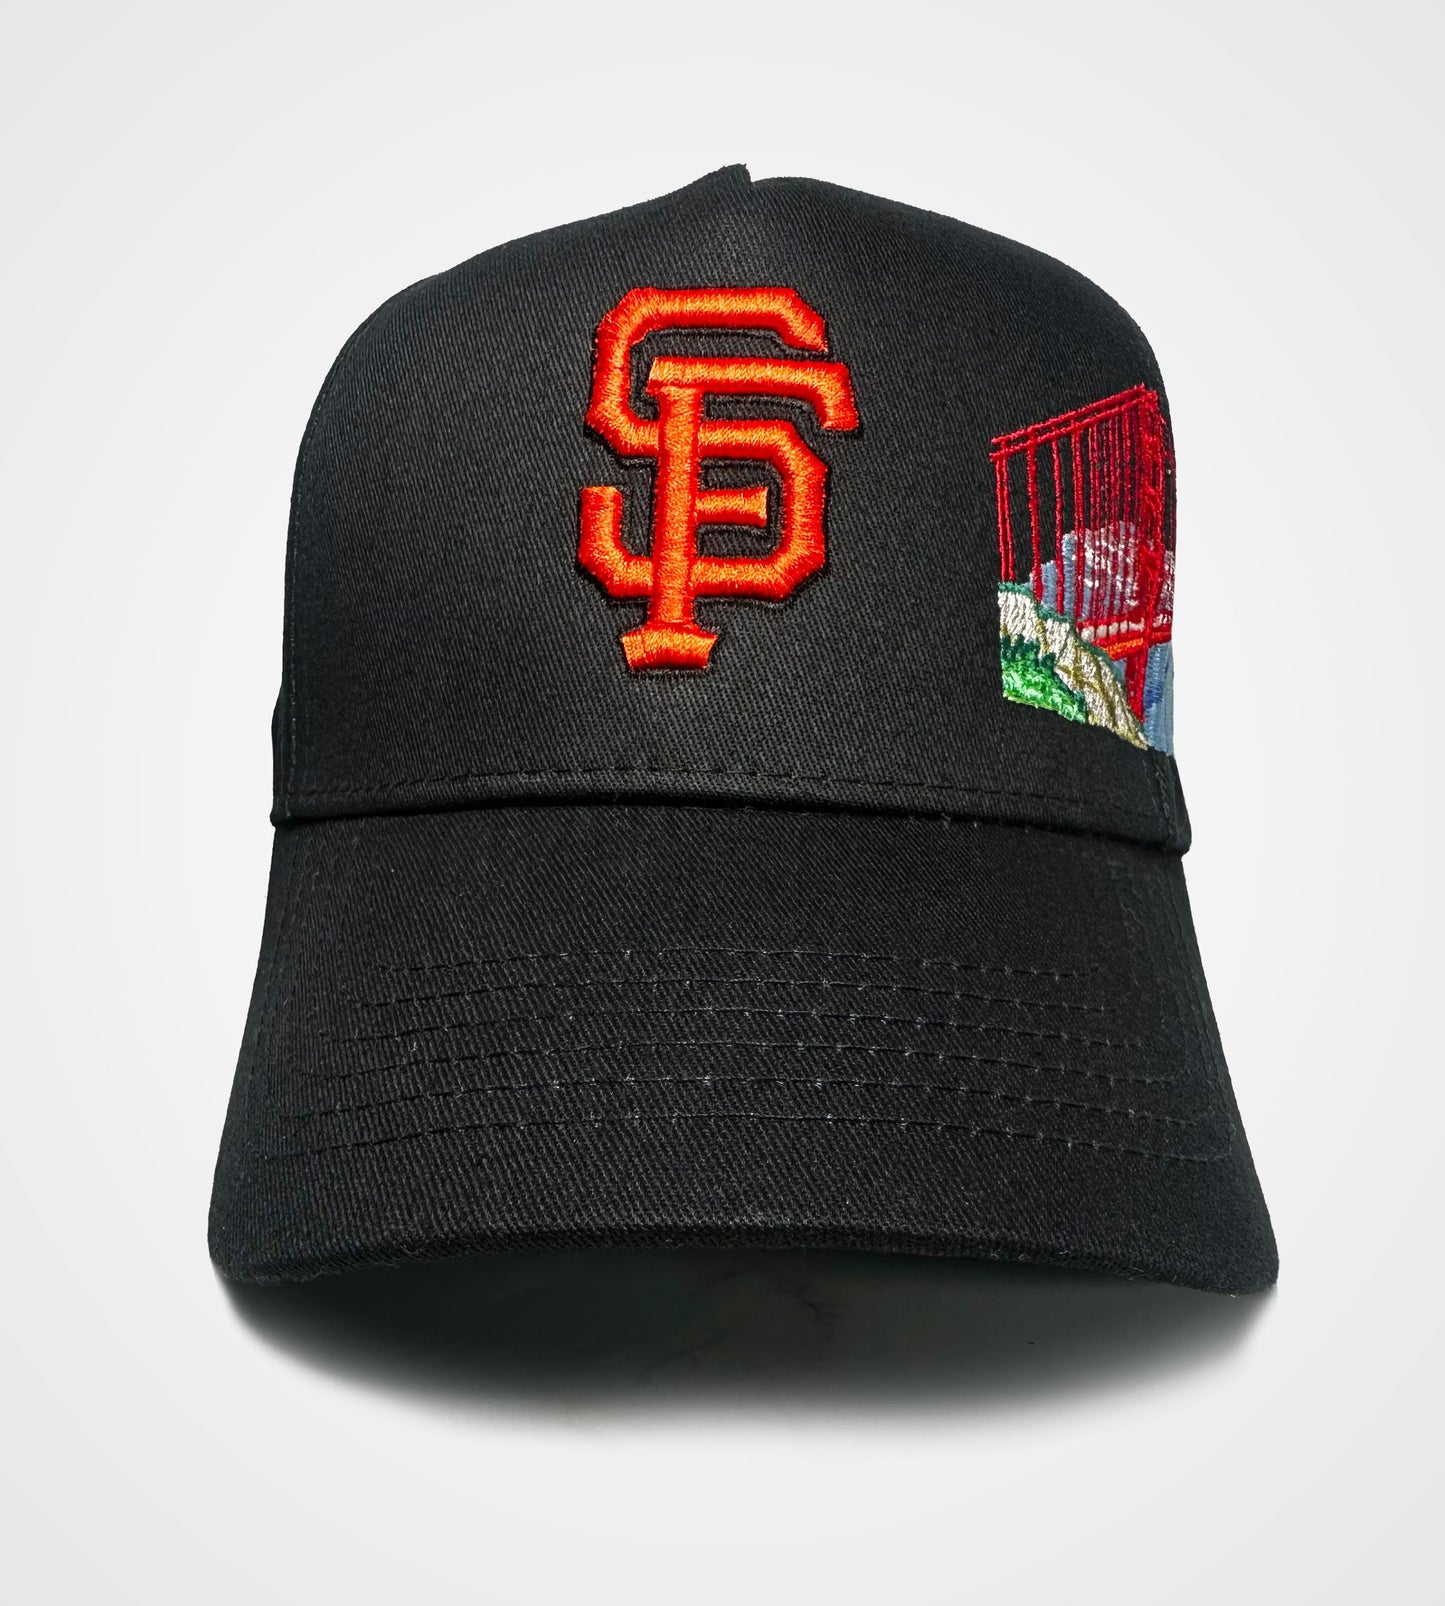 .SF San Francisco Giants Snapback